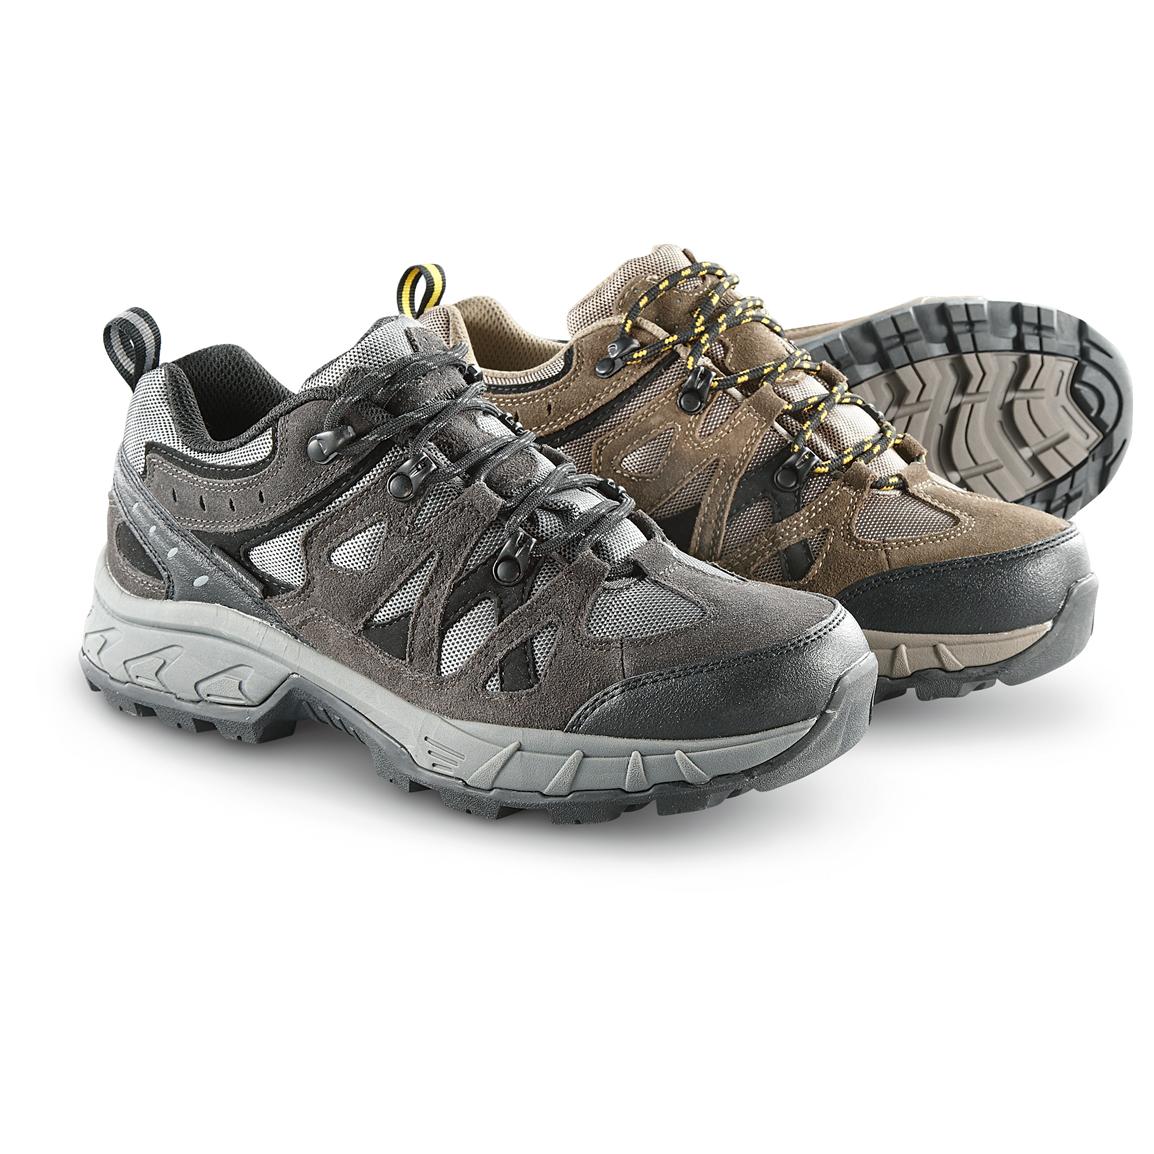 Men's Guide Gear Teck Low Waterproof Hiking Boots - 294057, Hiking ...